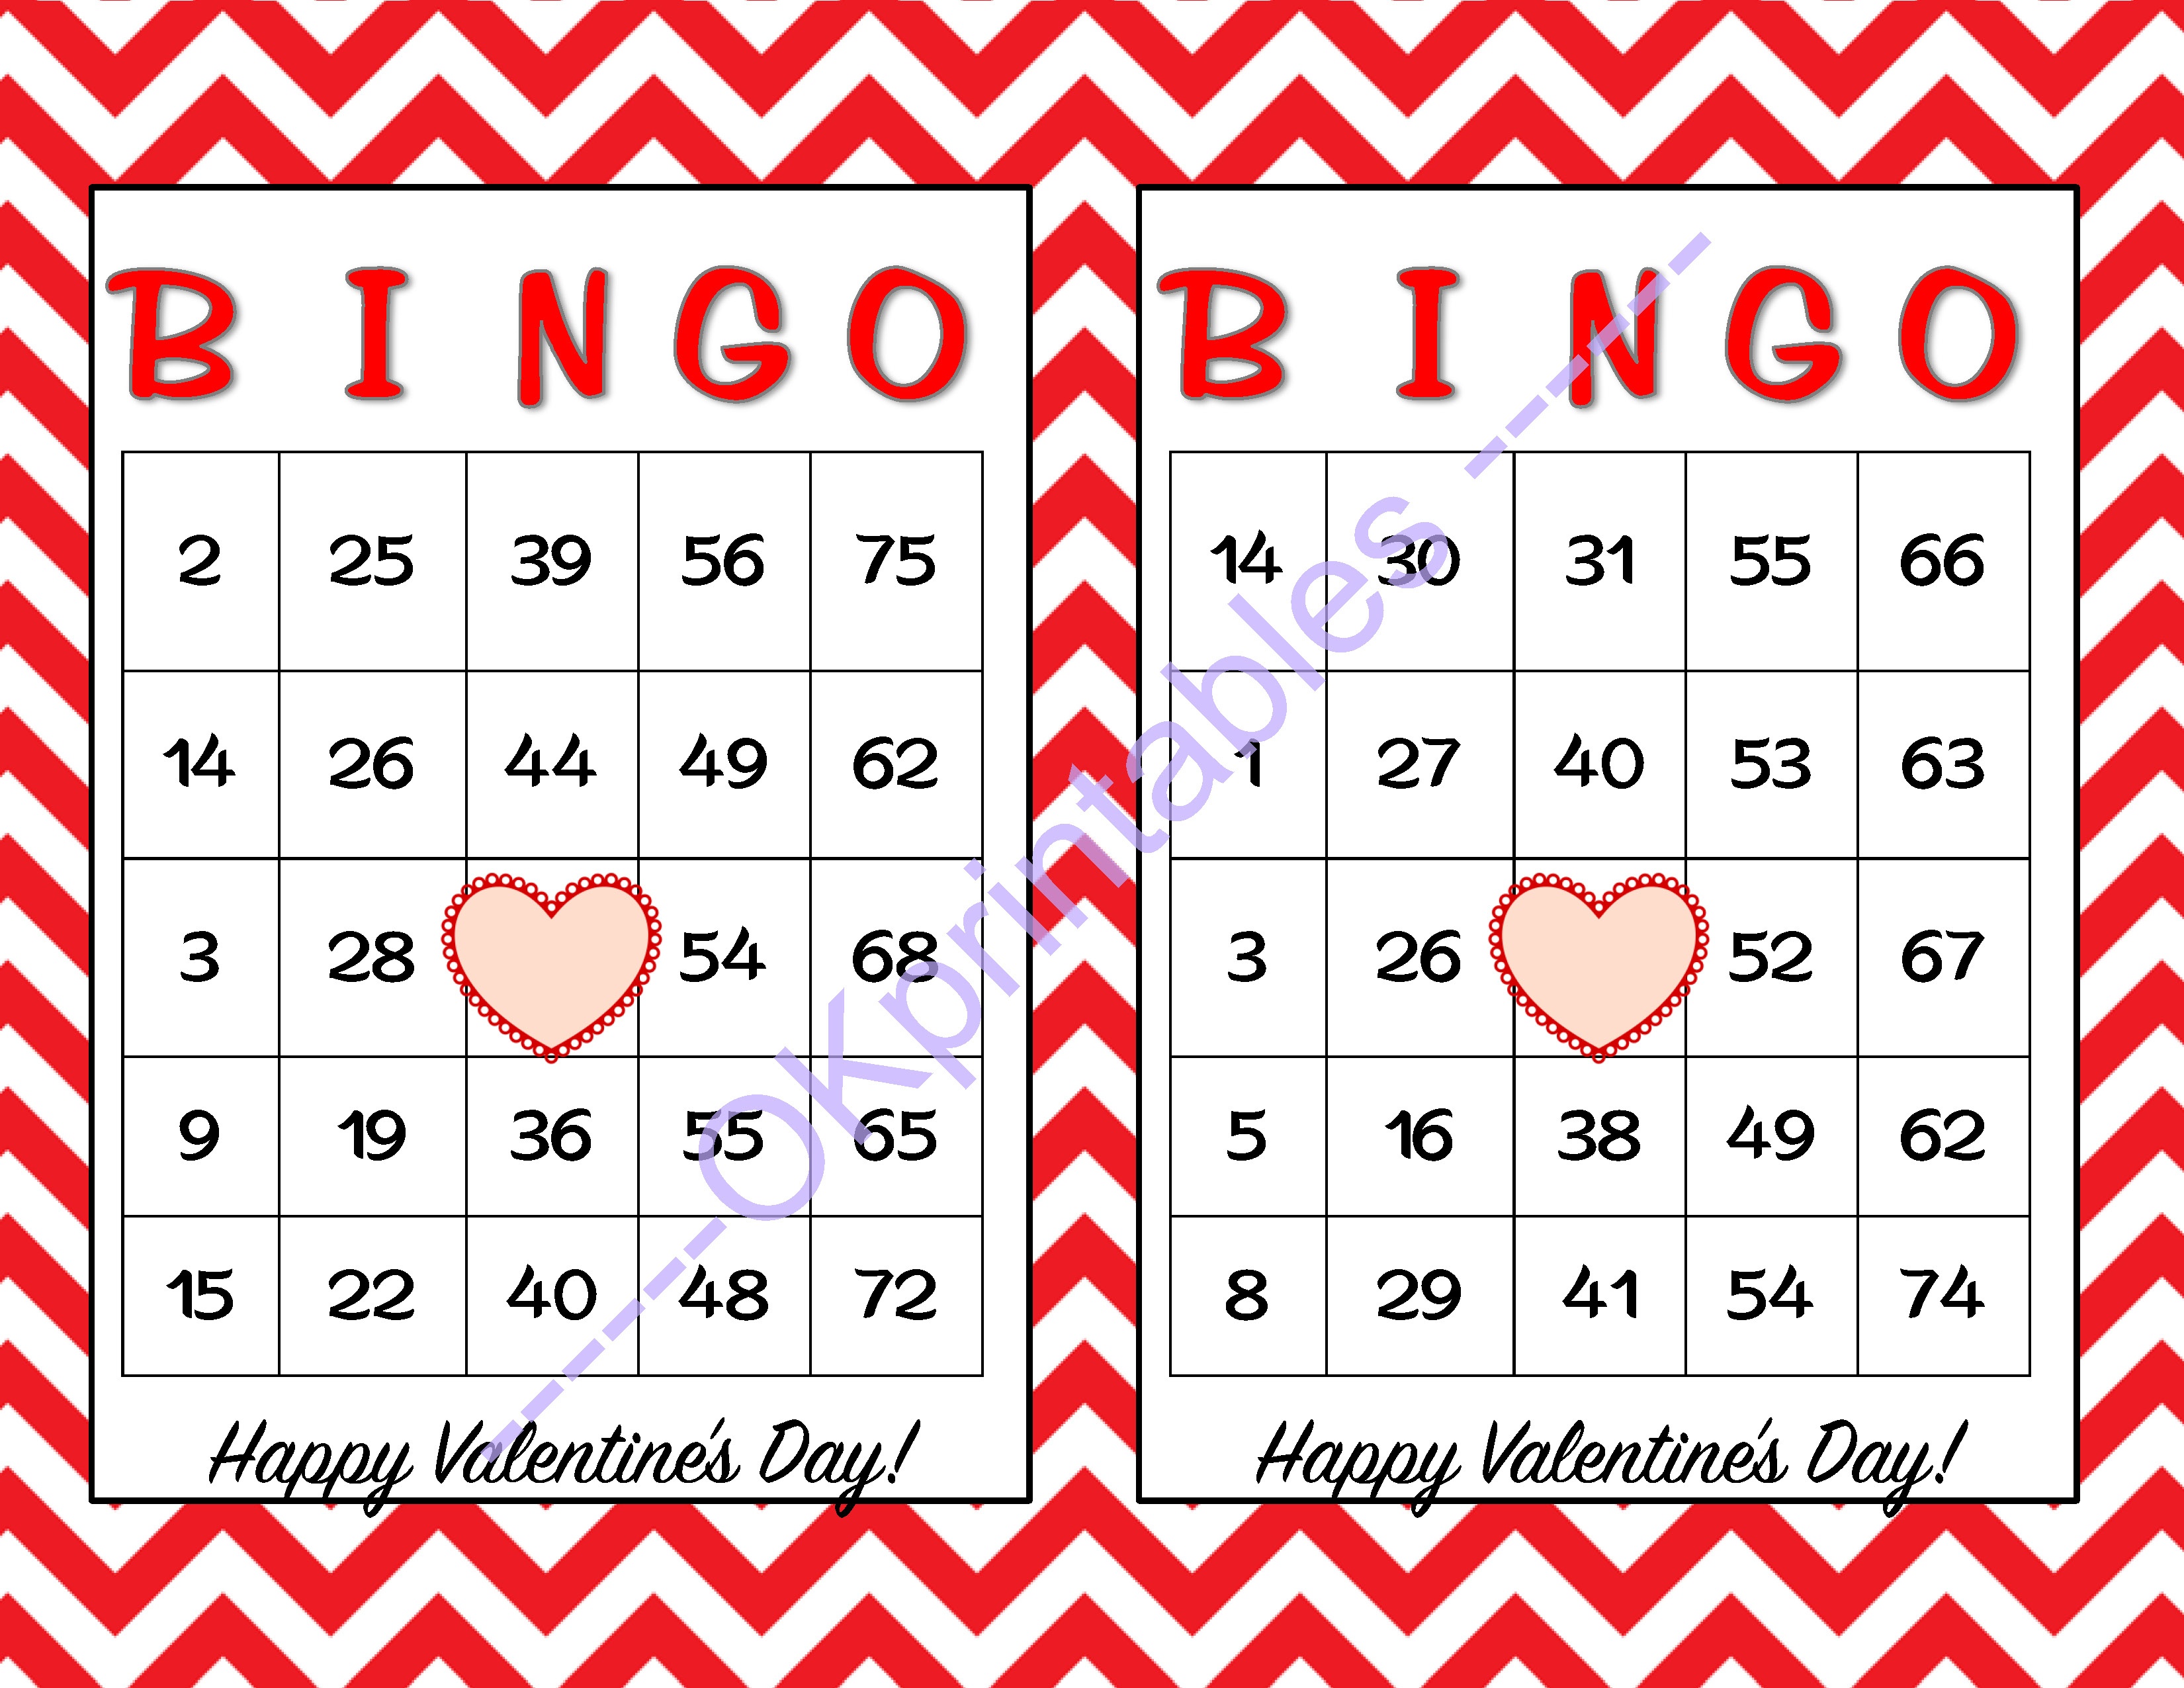 30 Happy Valentines Day Bingo Cards -Okprintables On Zibbet - Free Printable Bingo Cards Random Numbers